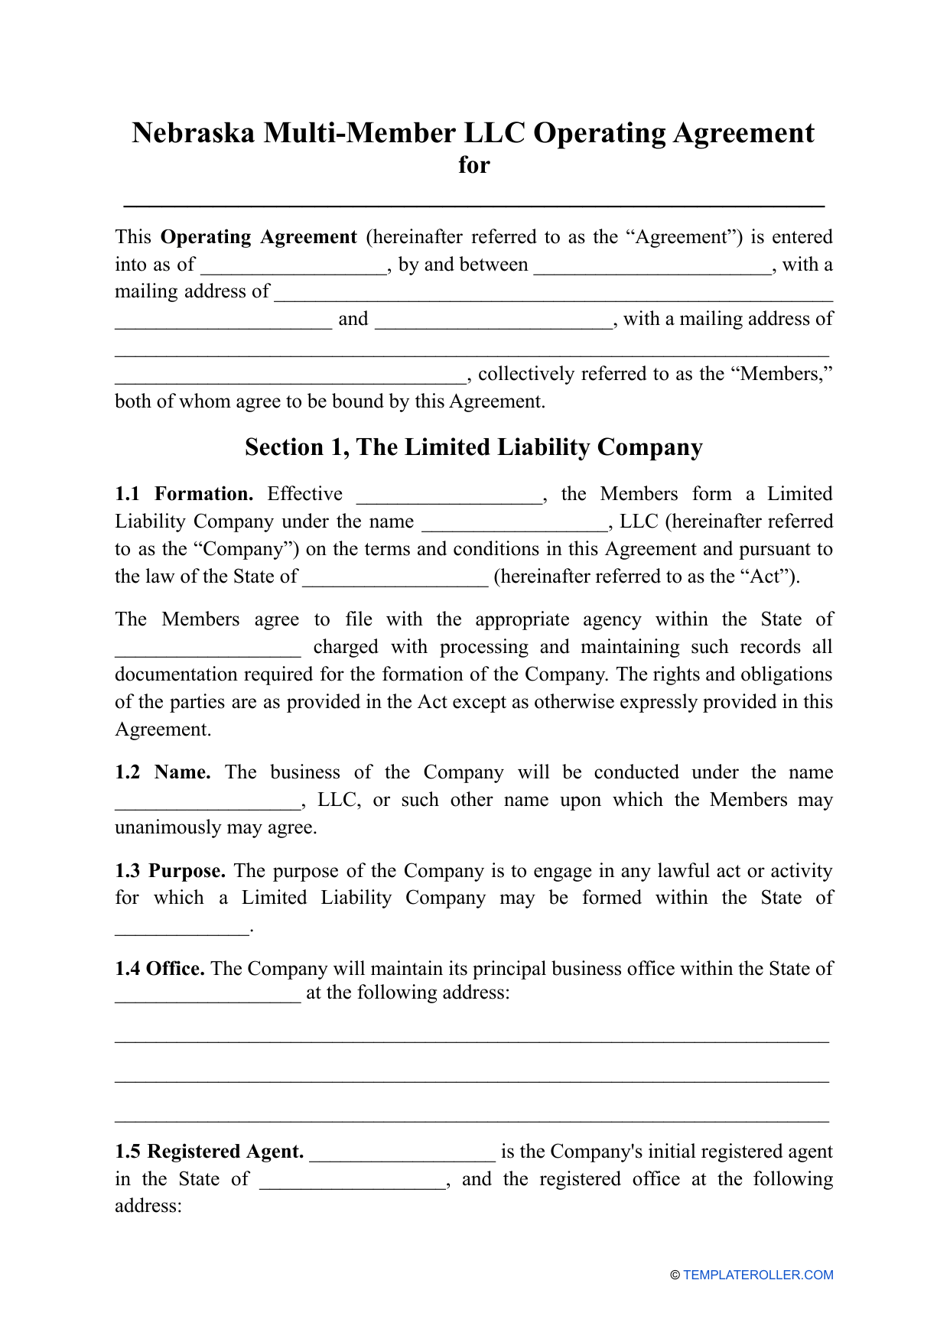 Multi-Member LLC Operating Agreement Template - Nebraska, Page 1